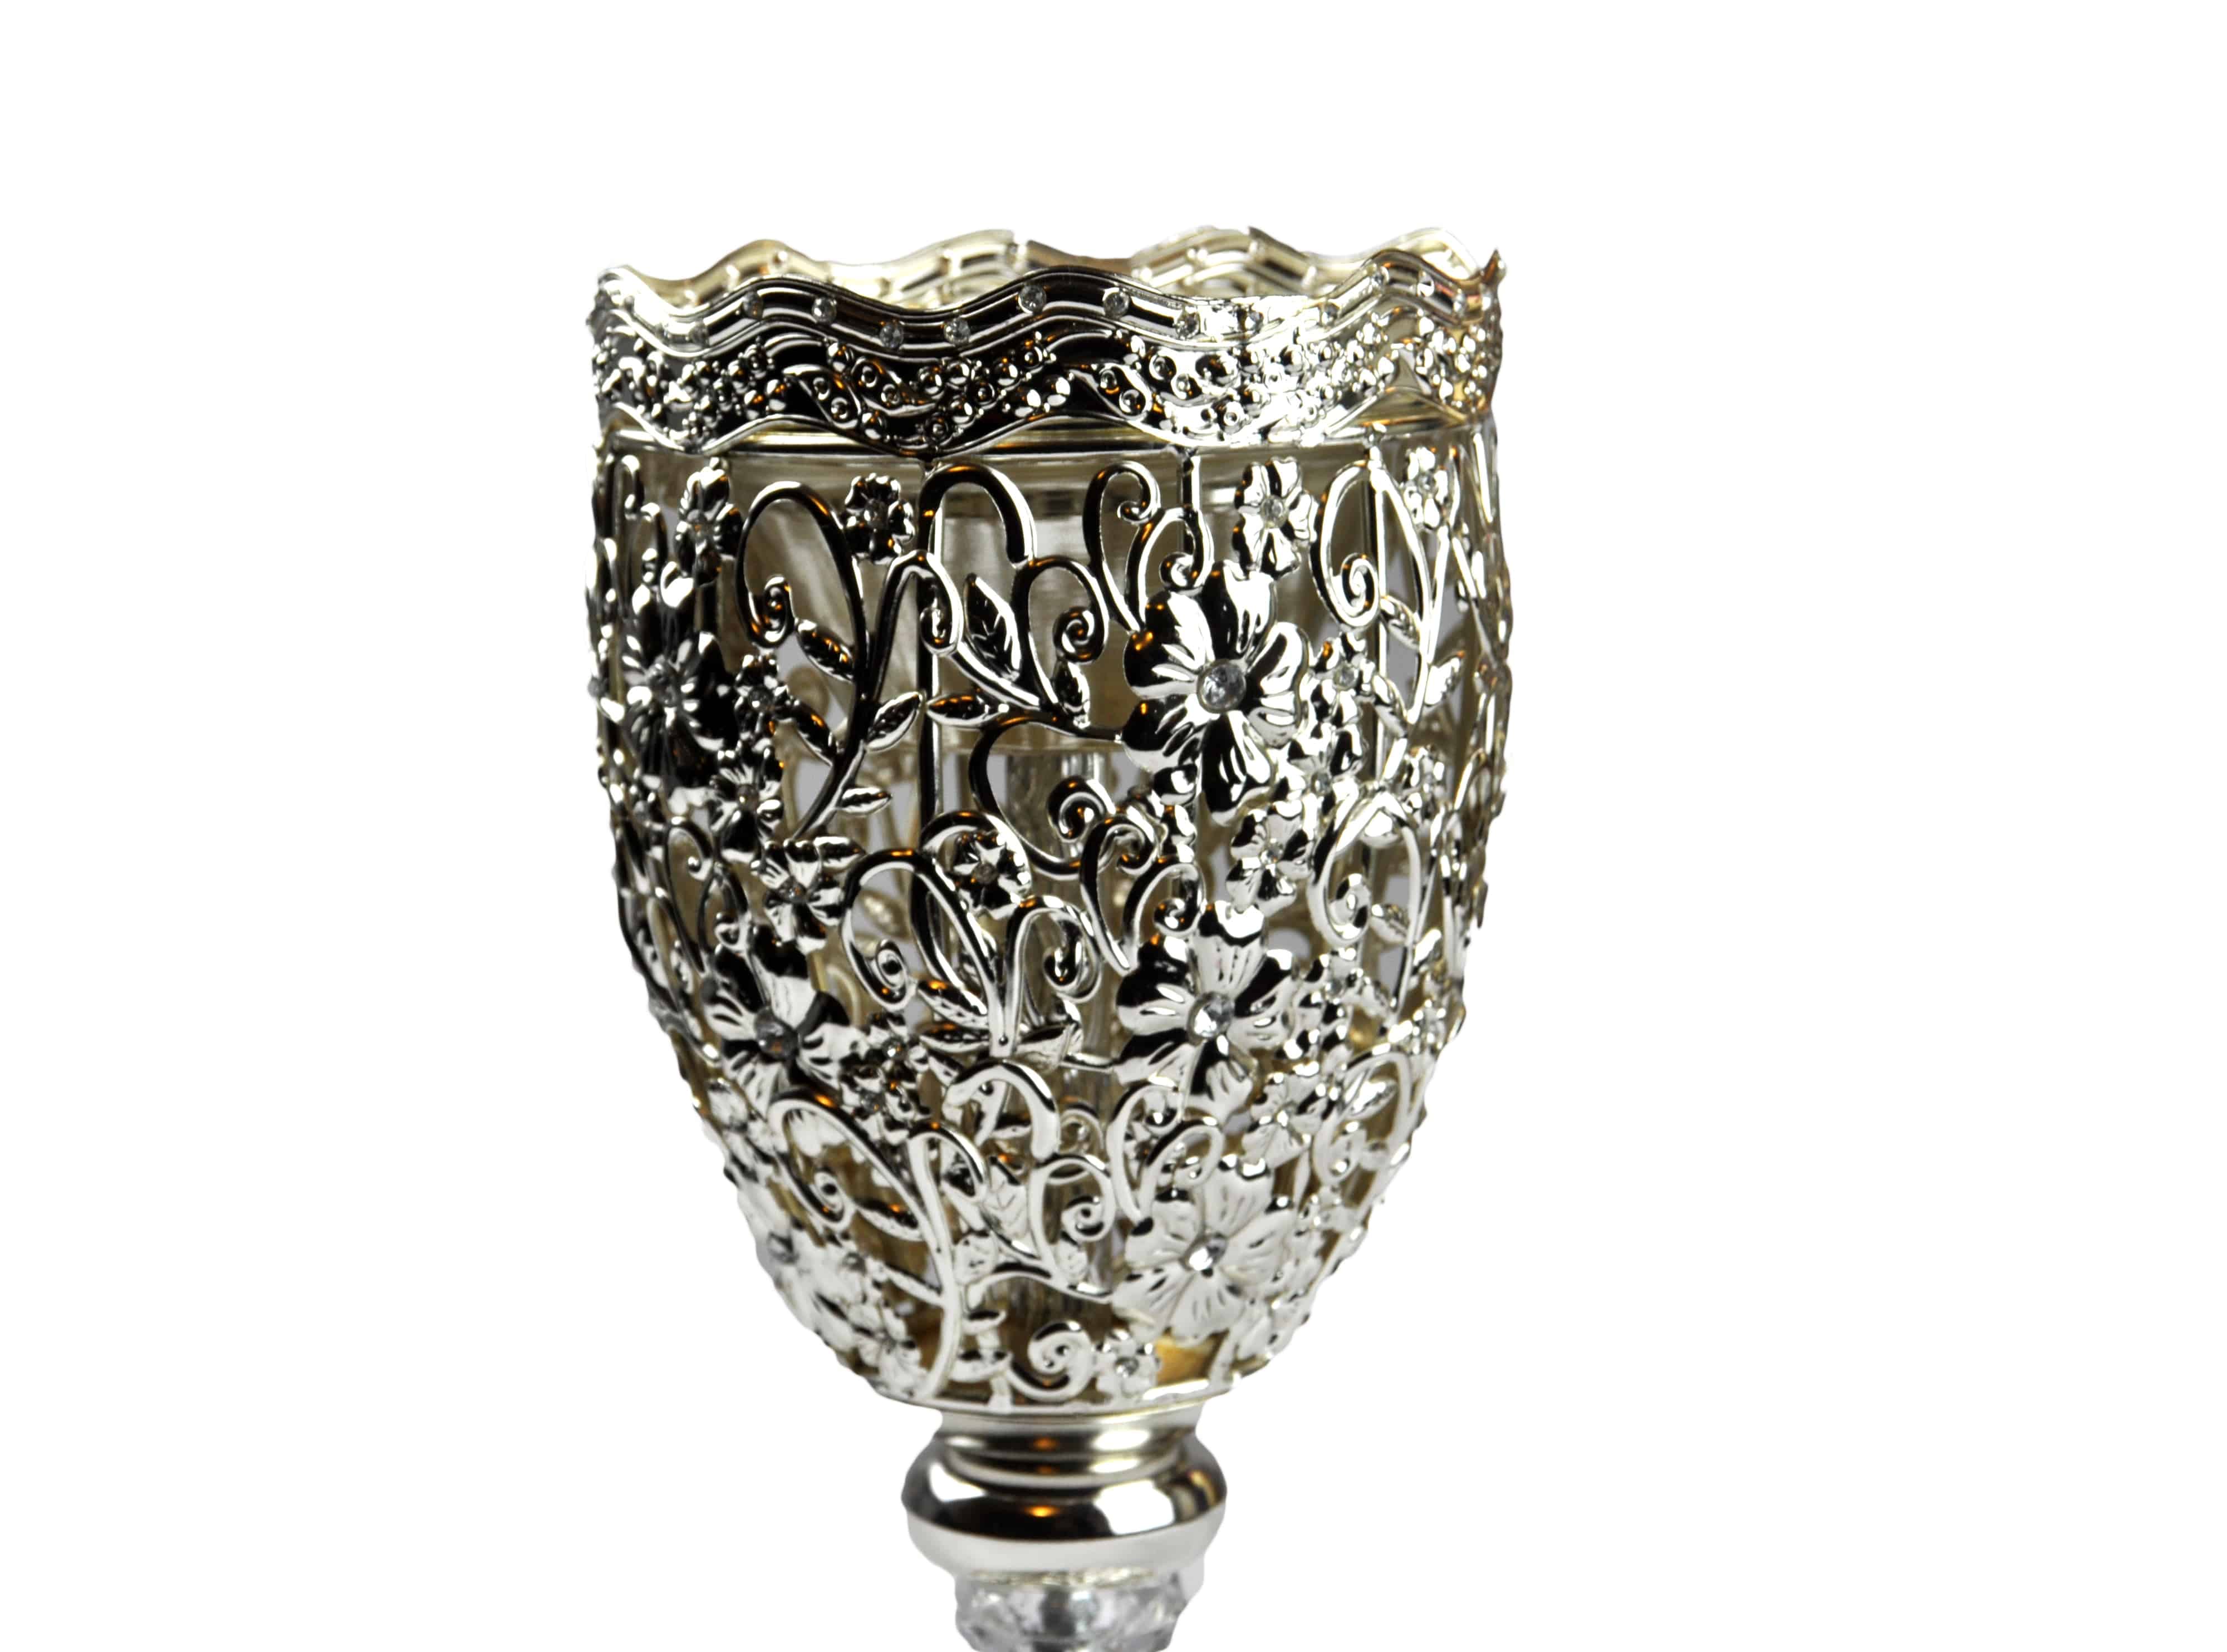 Arabia Incense/Bakhoor Burner (Mabkhara) -Oud Burner, Metal,Tray Inside 10 inch Tall (Silver) - Intense oud